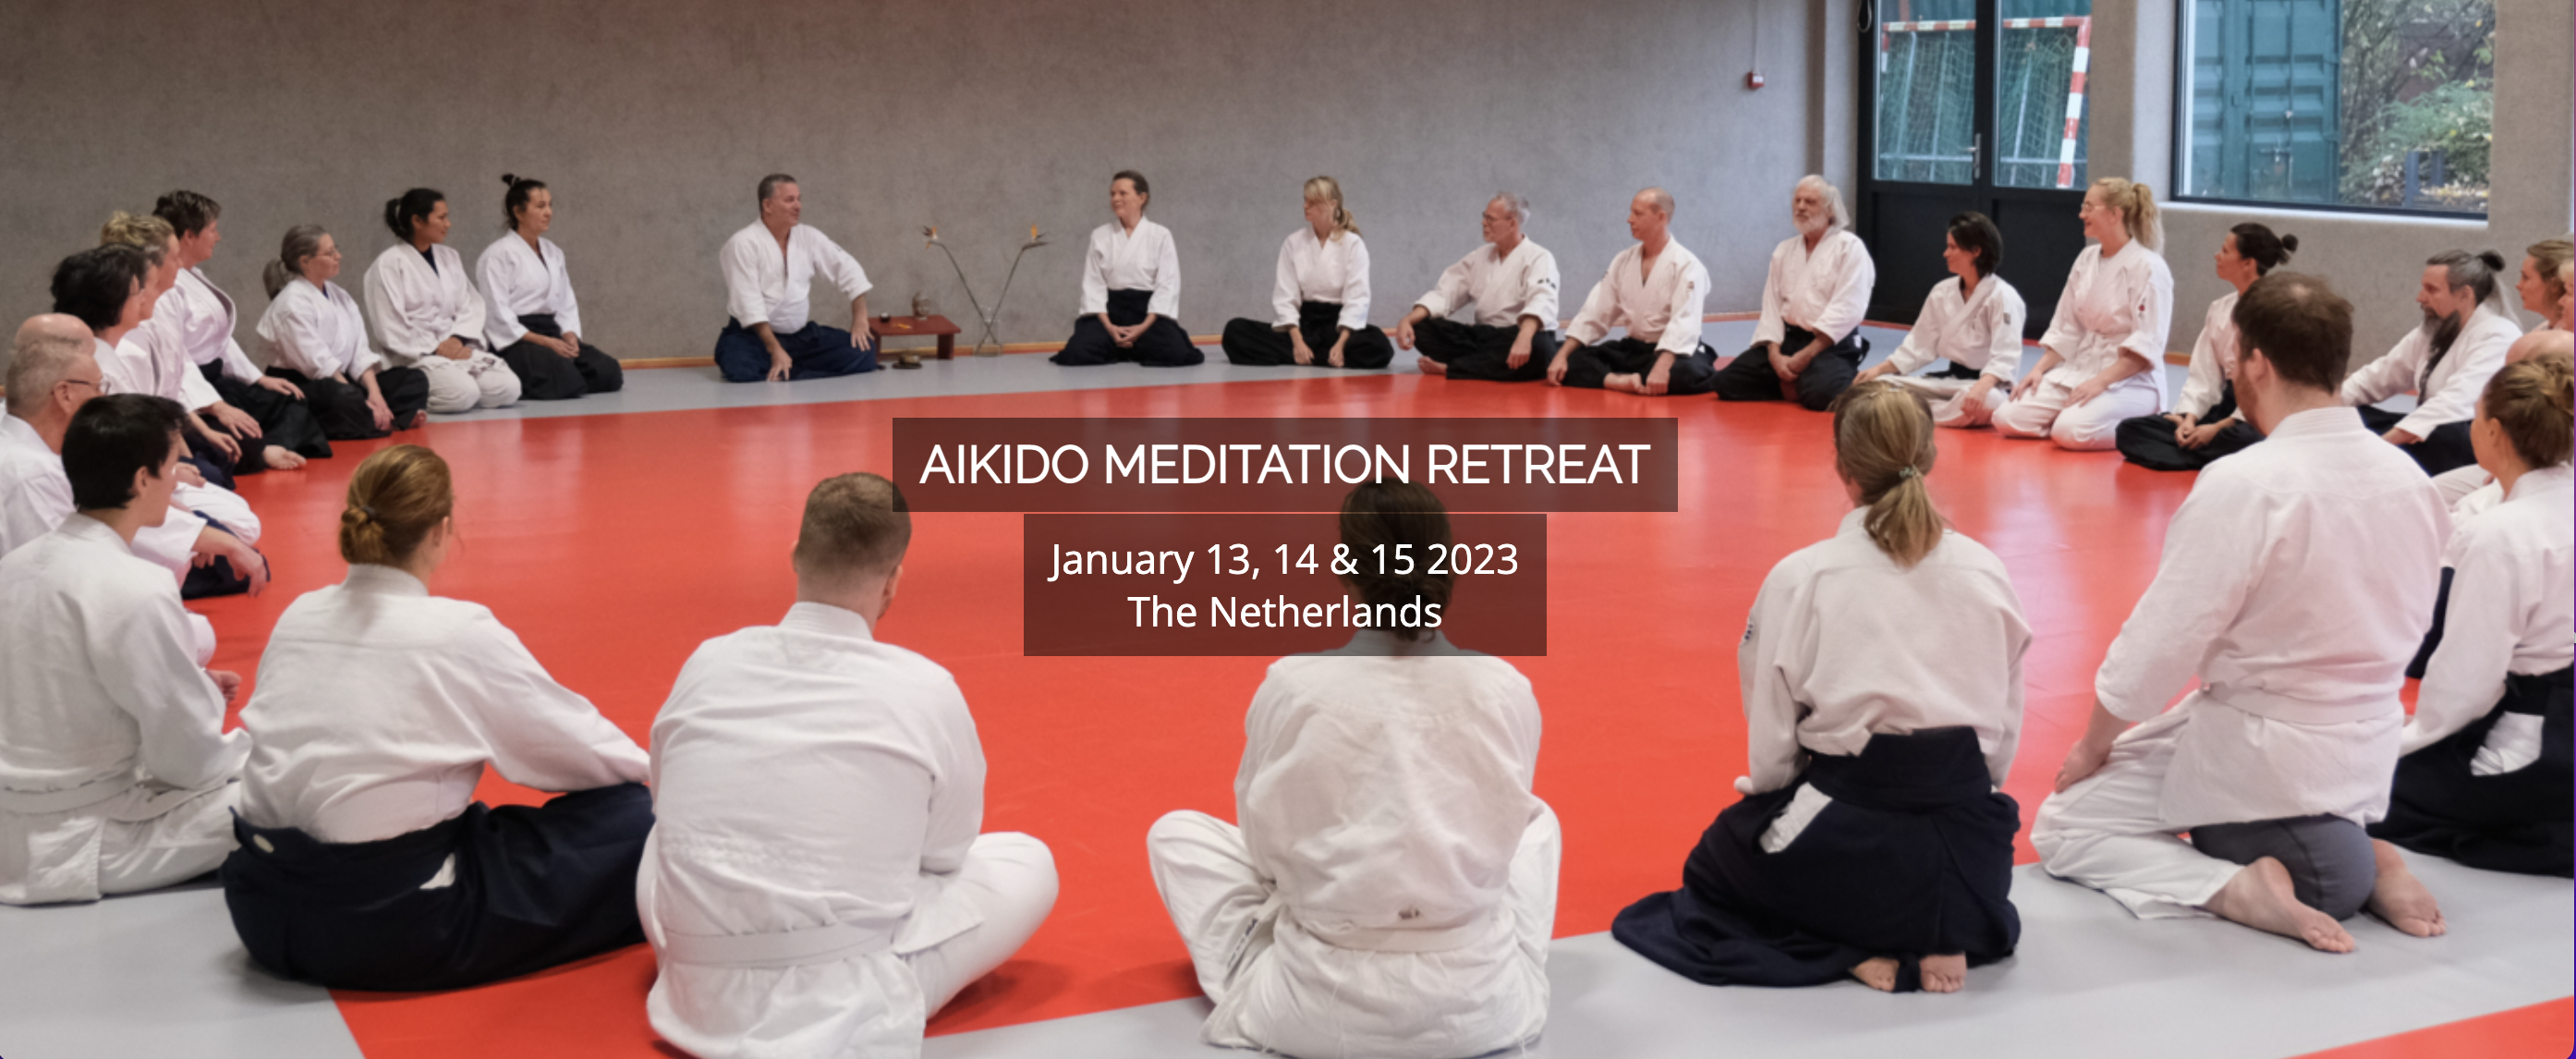 aikido meditation retreat